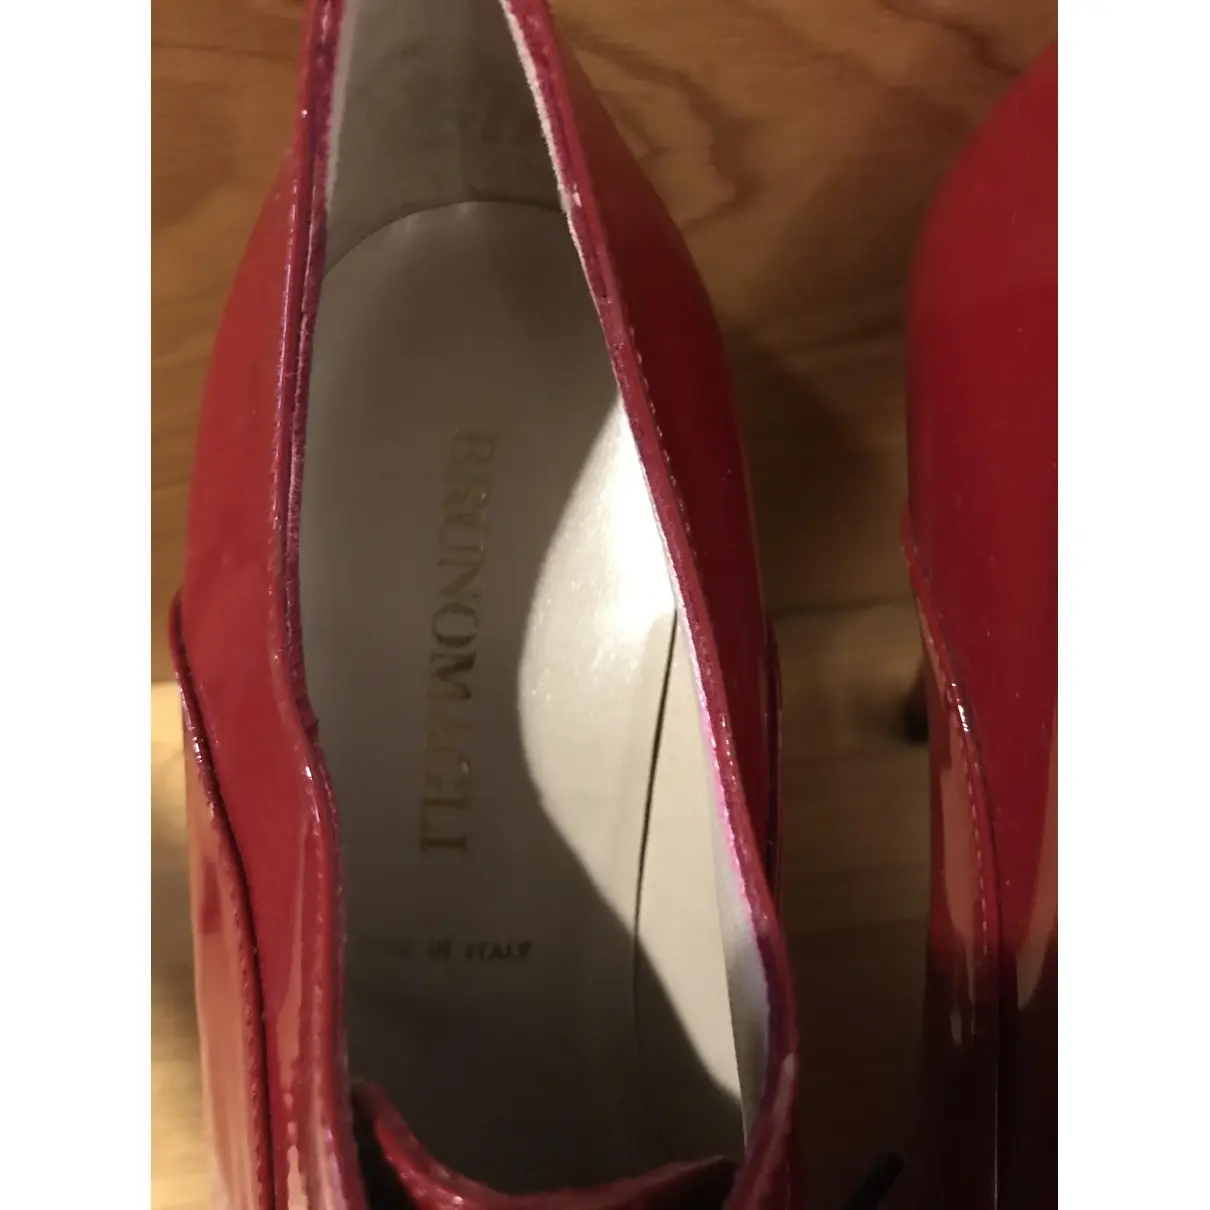 Buy Bruno Magli Patent leather heels online